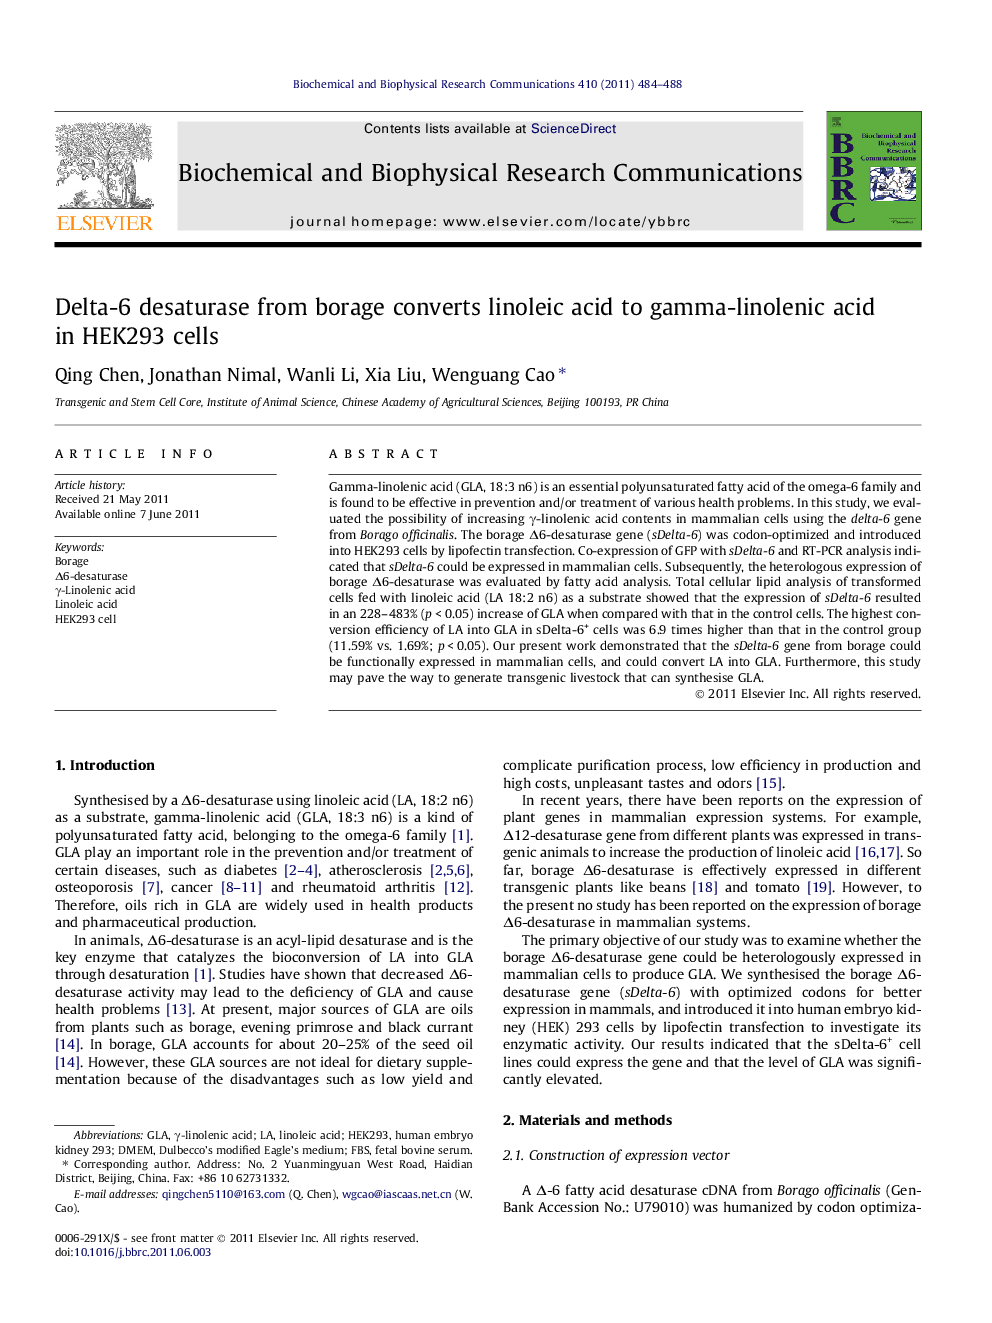 Delta-6 desaturase from borage converts linoleic acid to gamma-linolenic acid in HEK293 cells